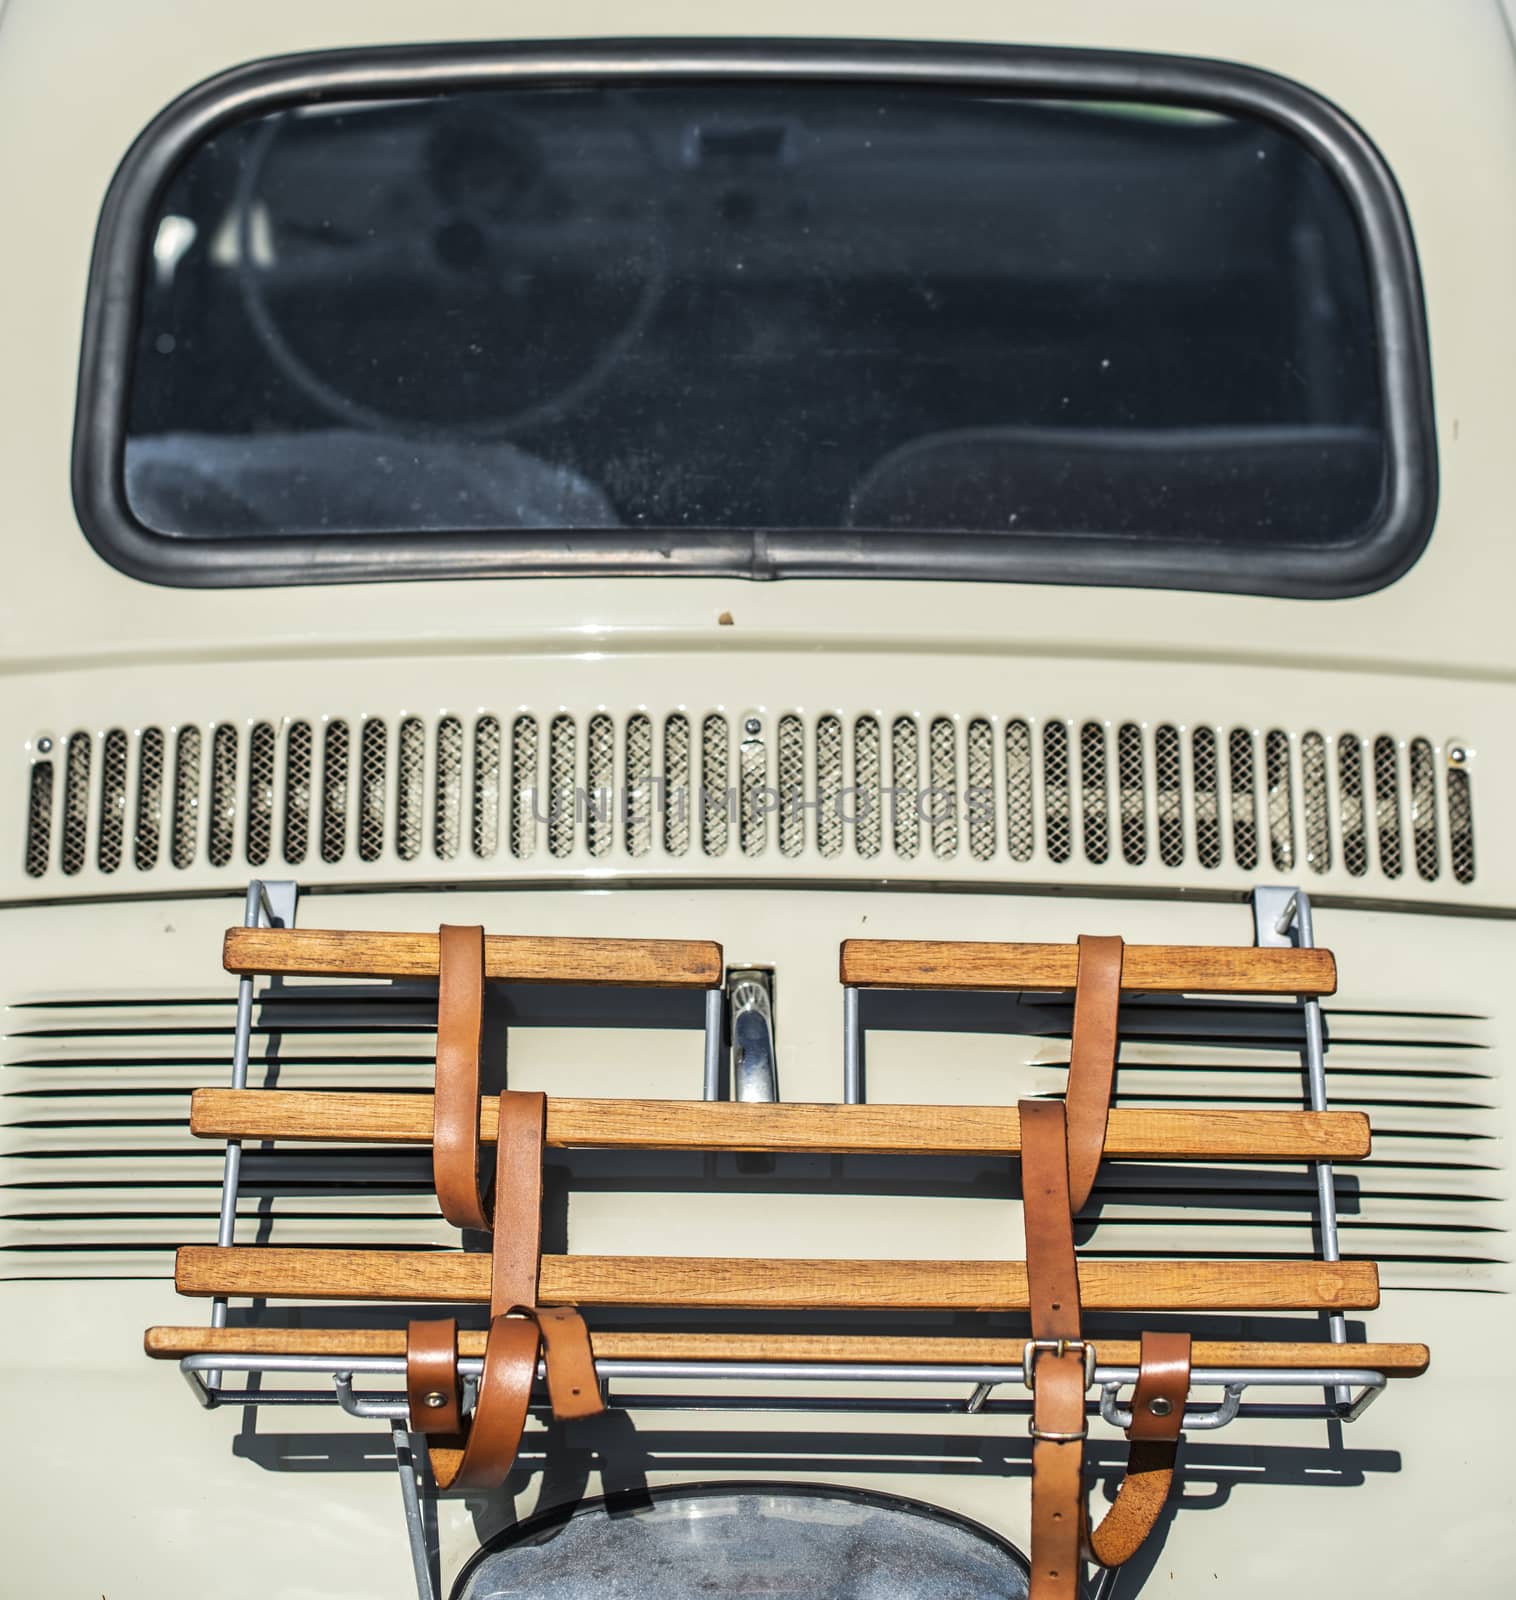 Vintage beige color car trunk. Small old car. Italian car. Sunny day